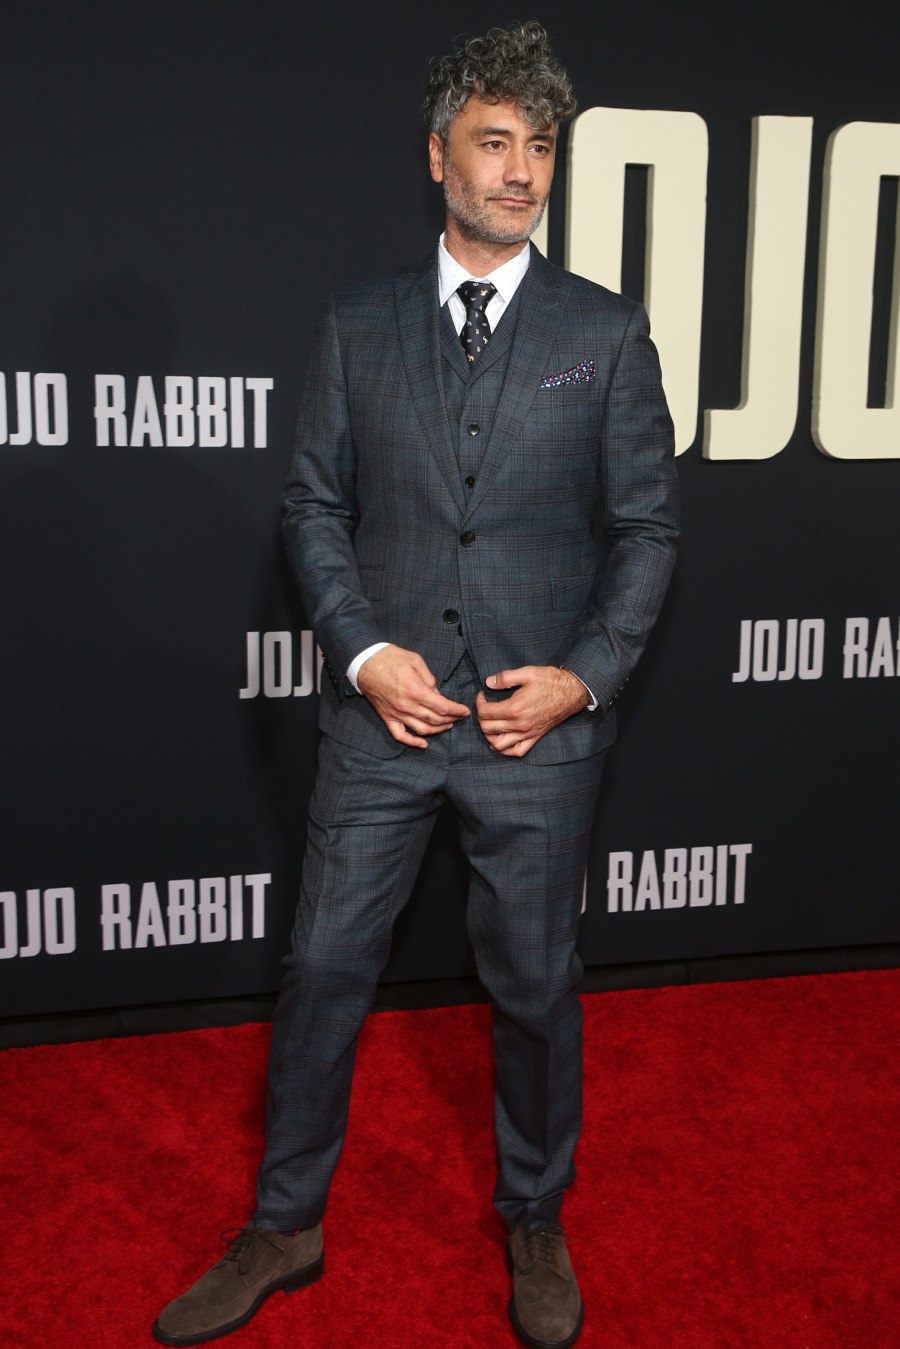 Premiere Of Fox Searchlights' "Jojo Rabbit"